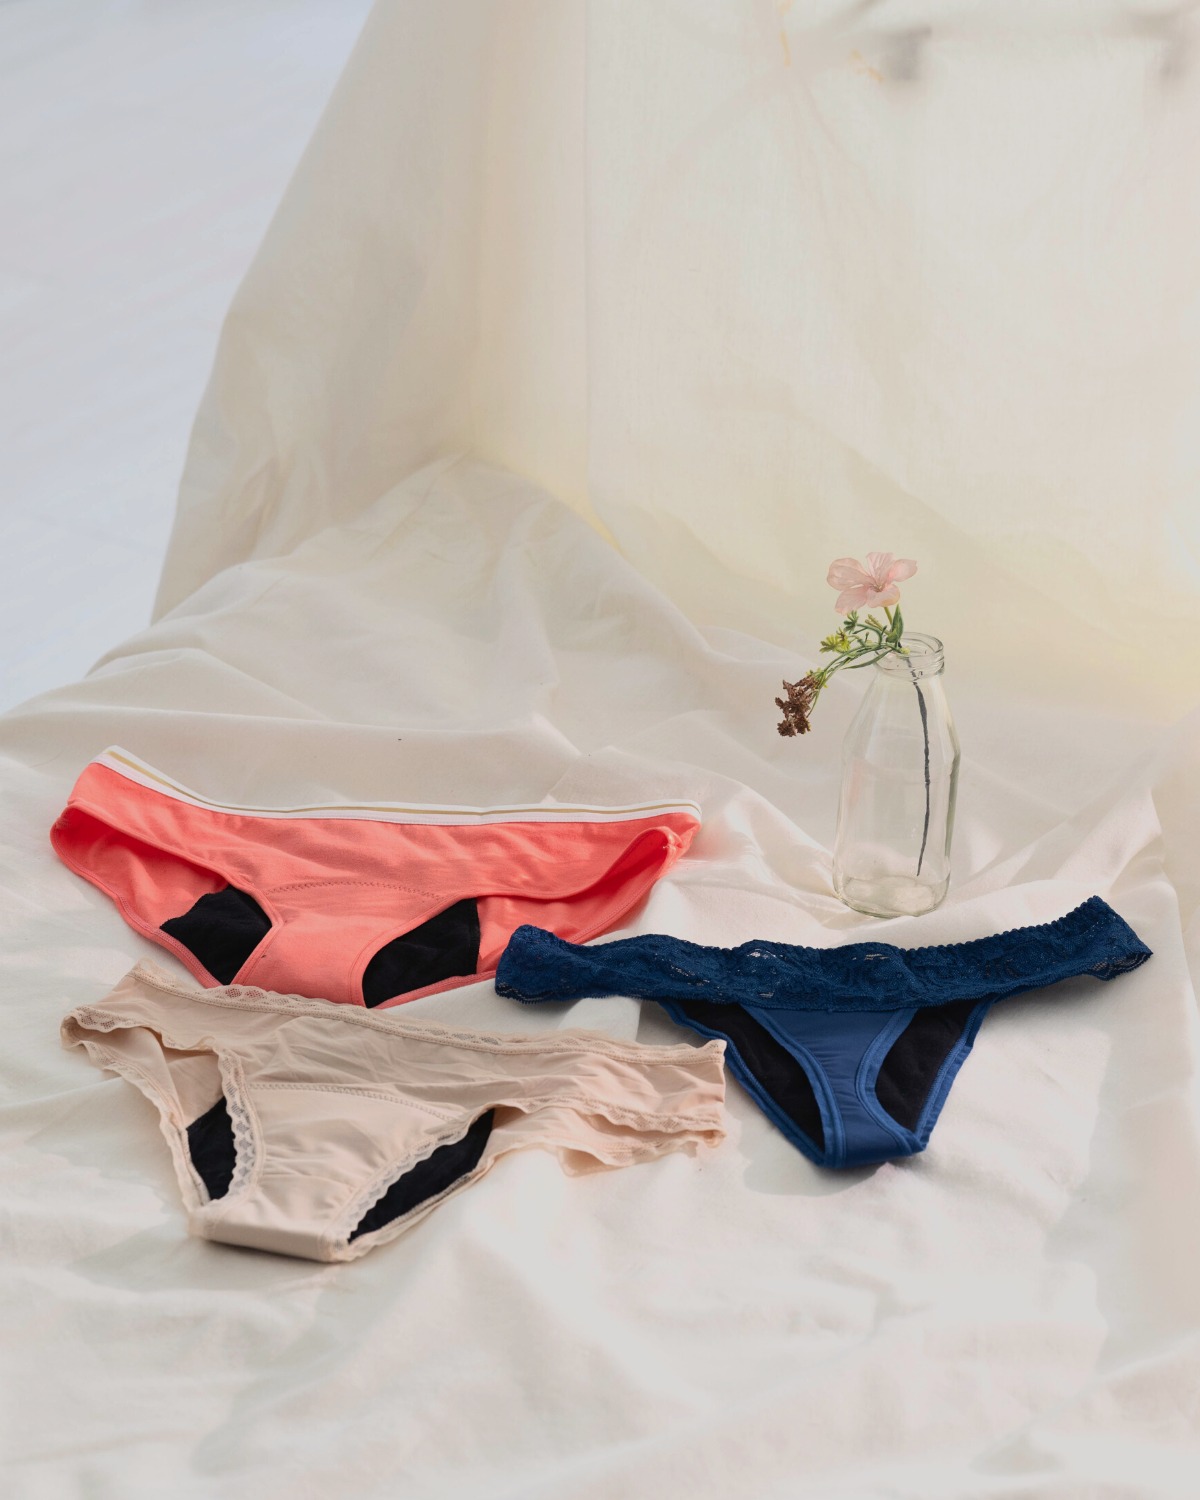 Quần nguyệt san MENE period panties A REVOLUTION FOR WOMEN Kiểu quyến rũ